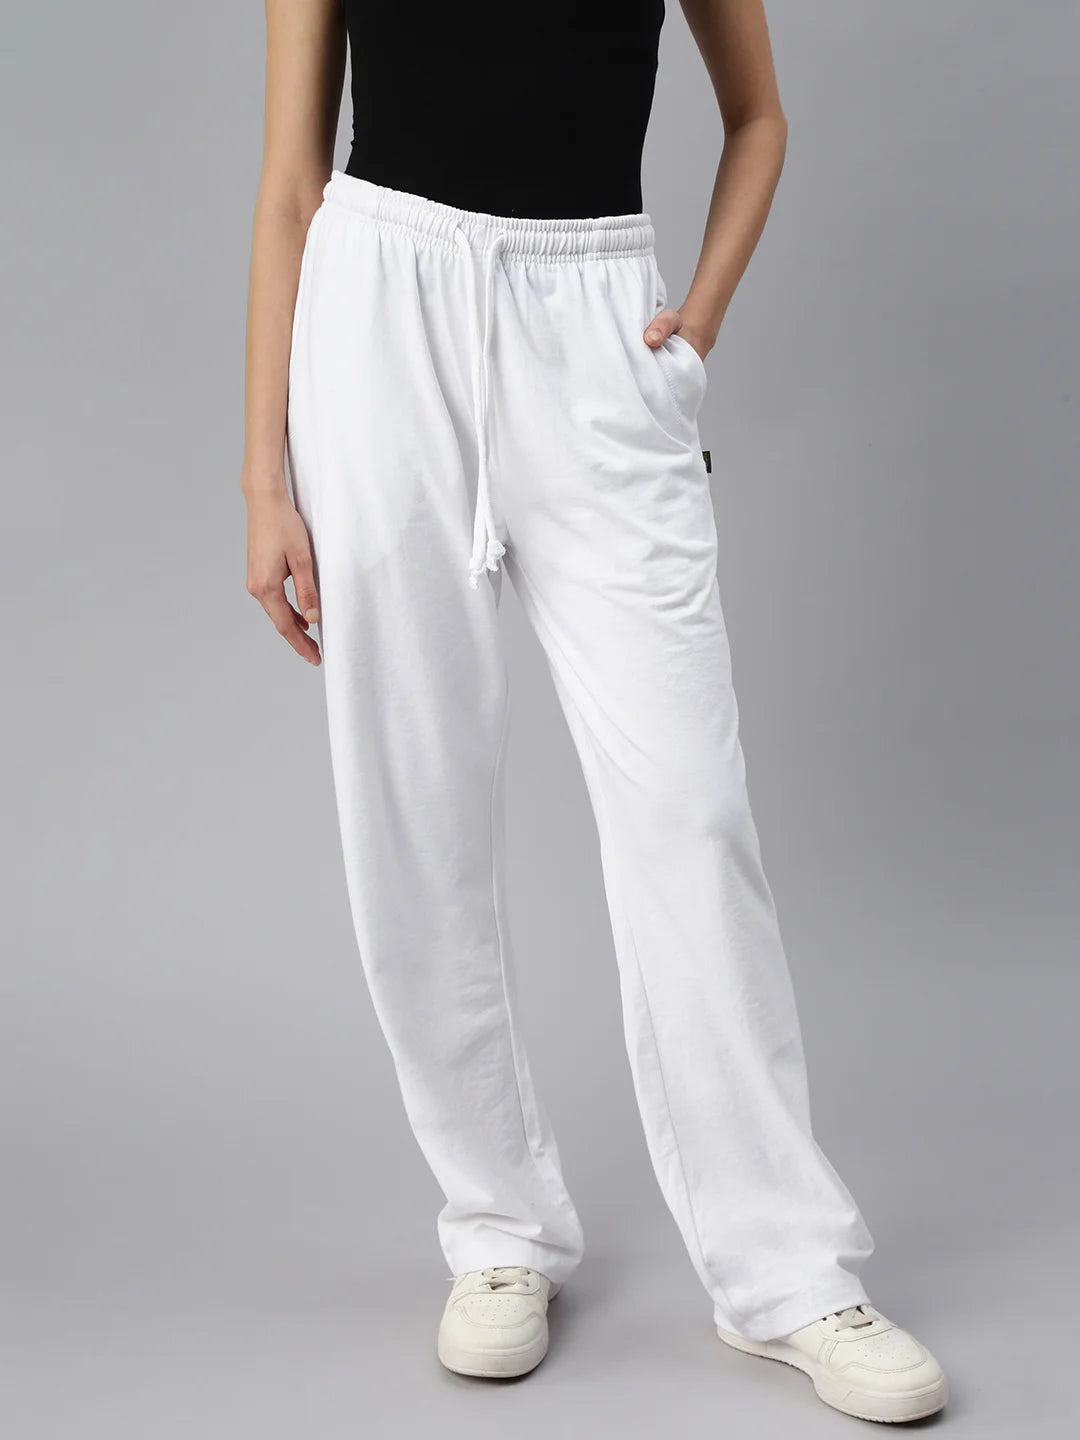 unisex-denver-baumwolle-polyester-sweatpants-blanc-Front